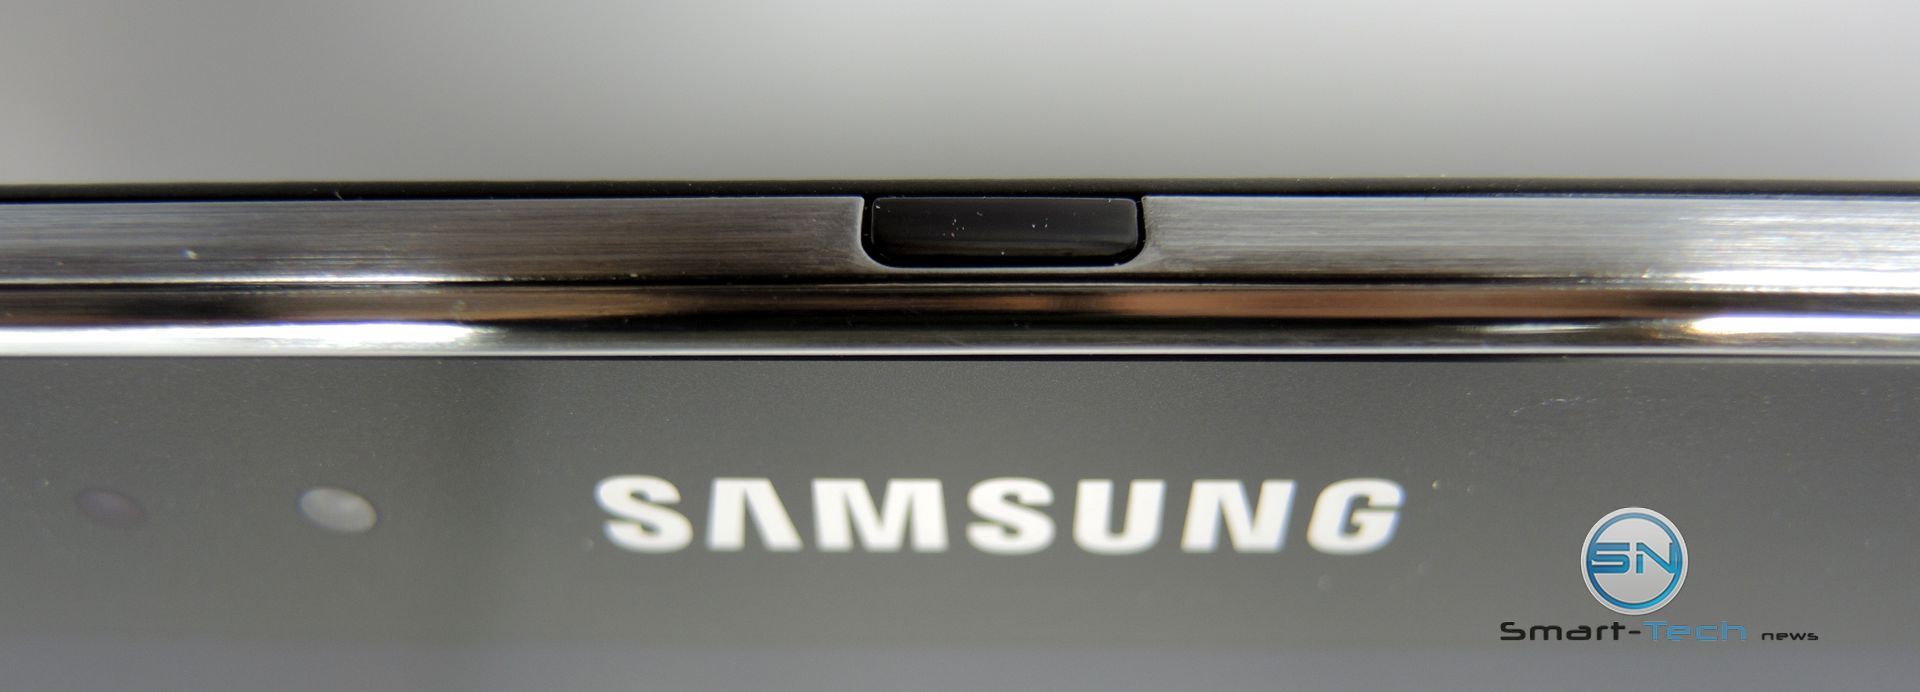 Samsung Galaxy Tab Pro - Unboxing 07